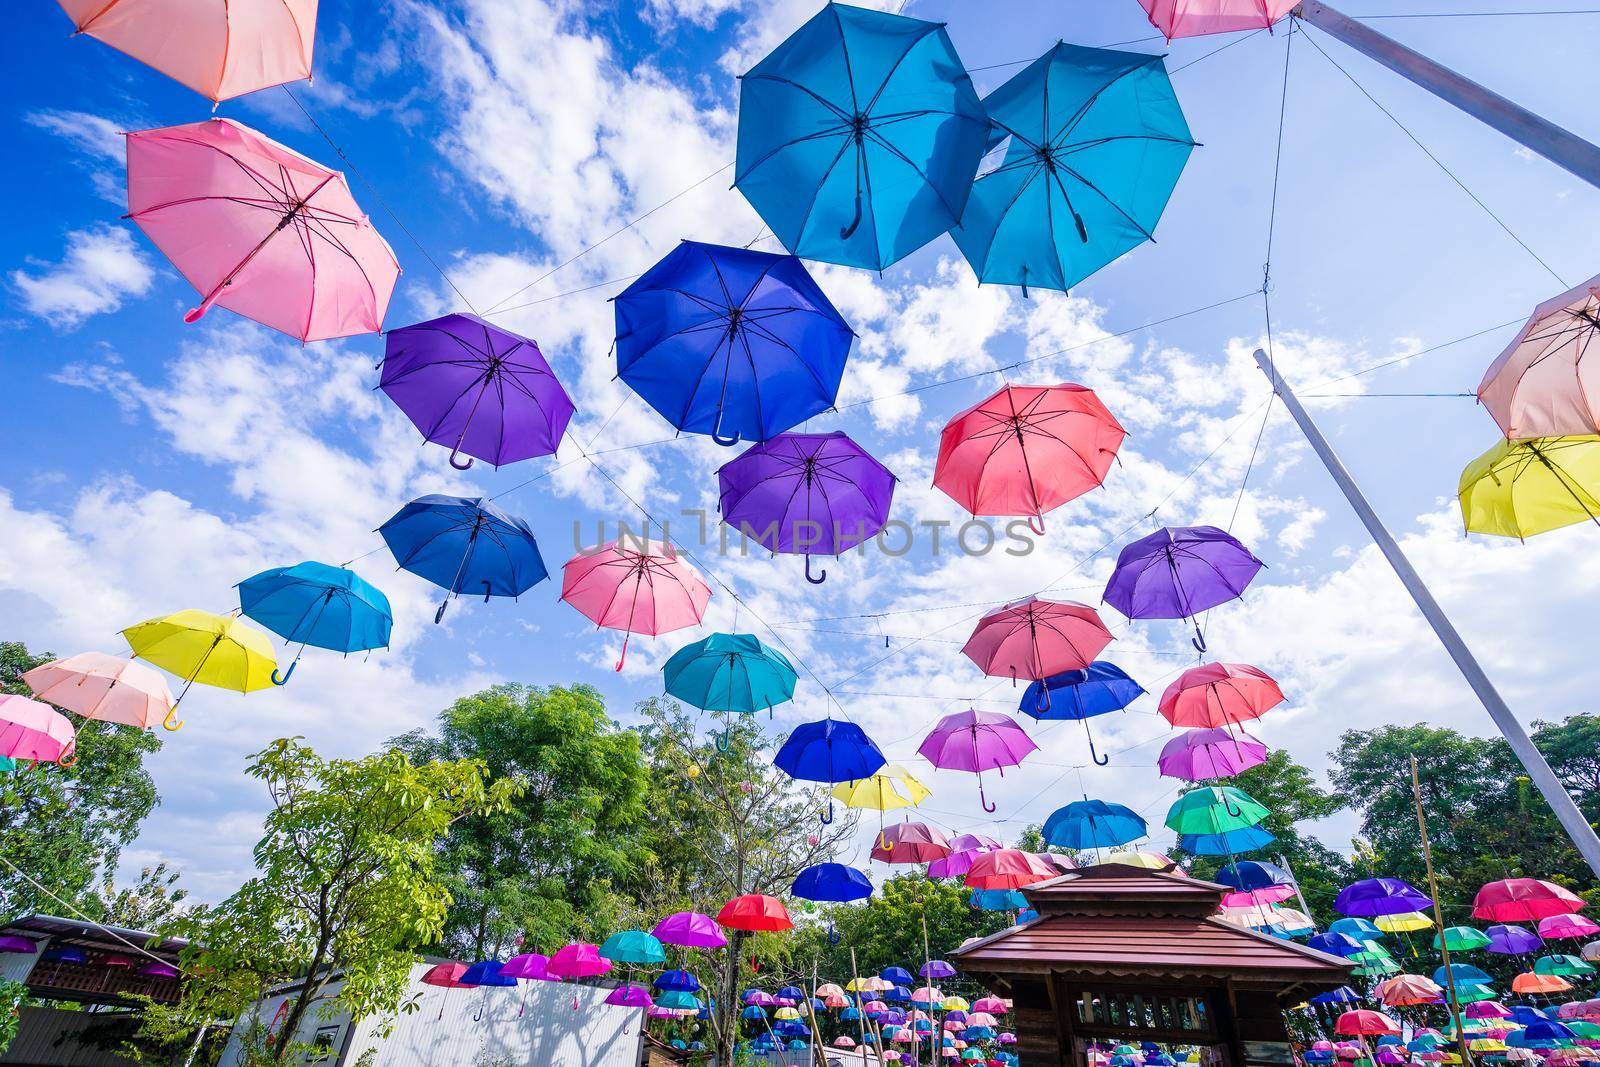 Colorful umbrellas in the sky